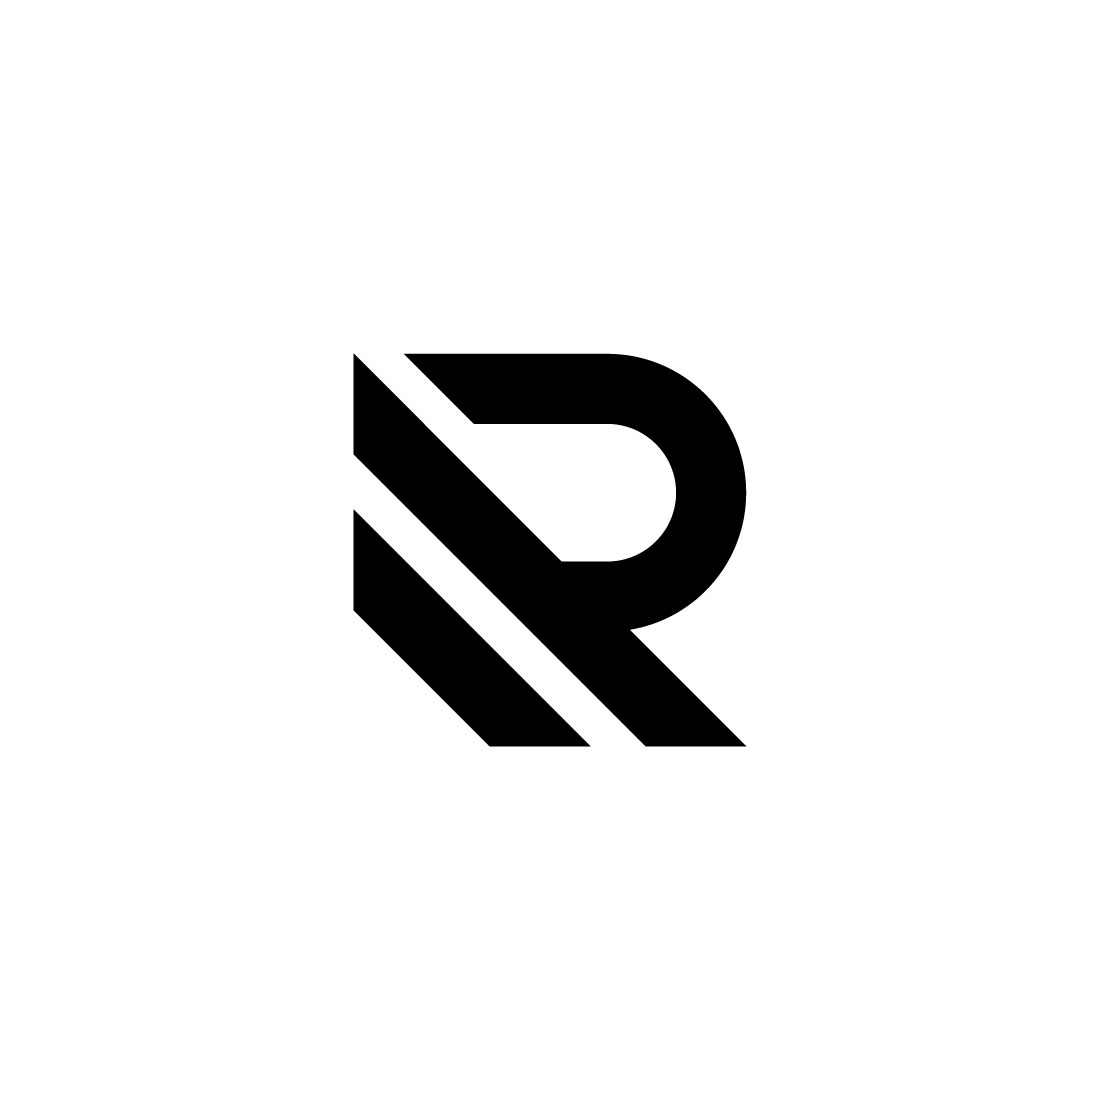 r design logo